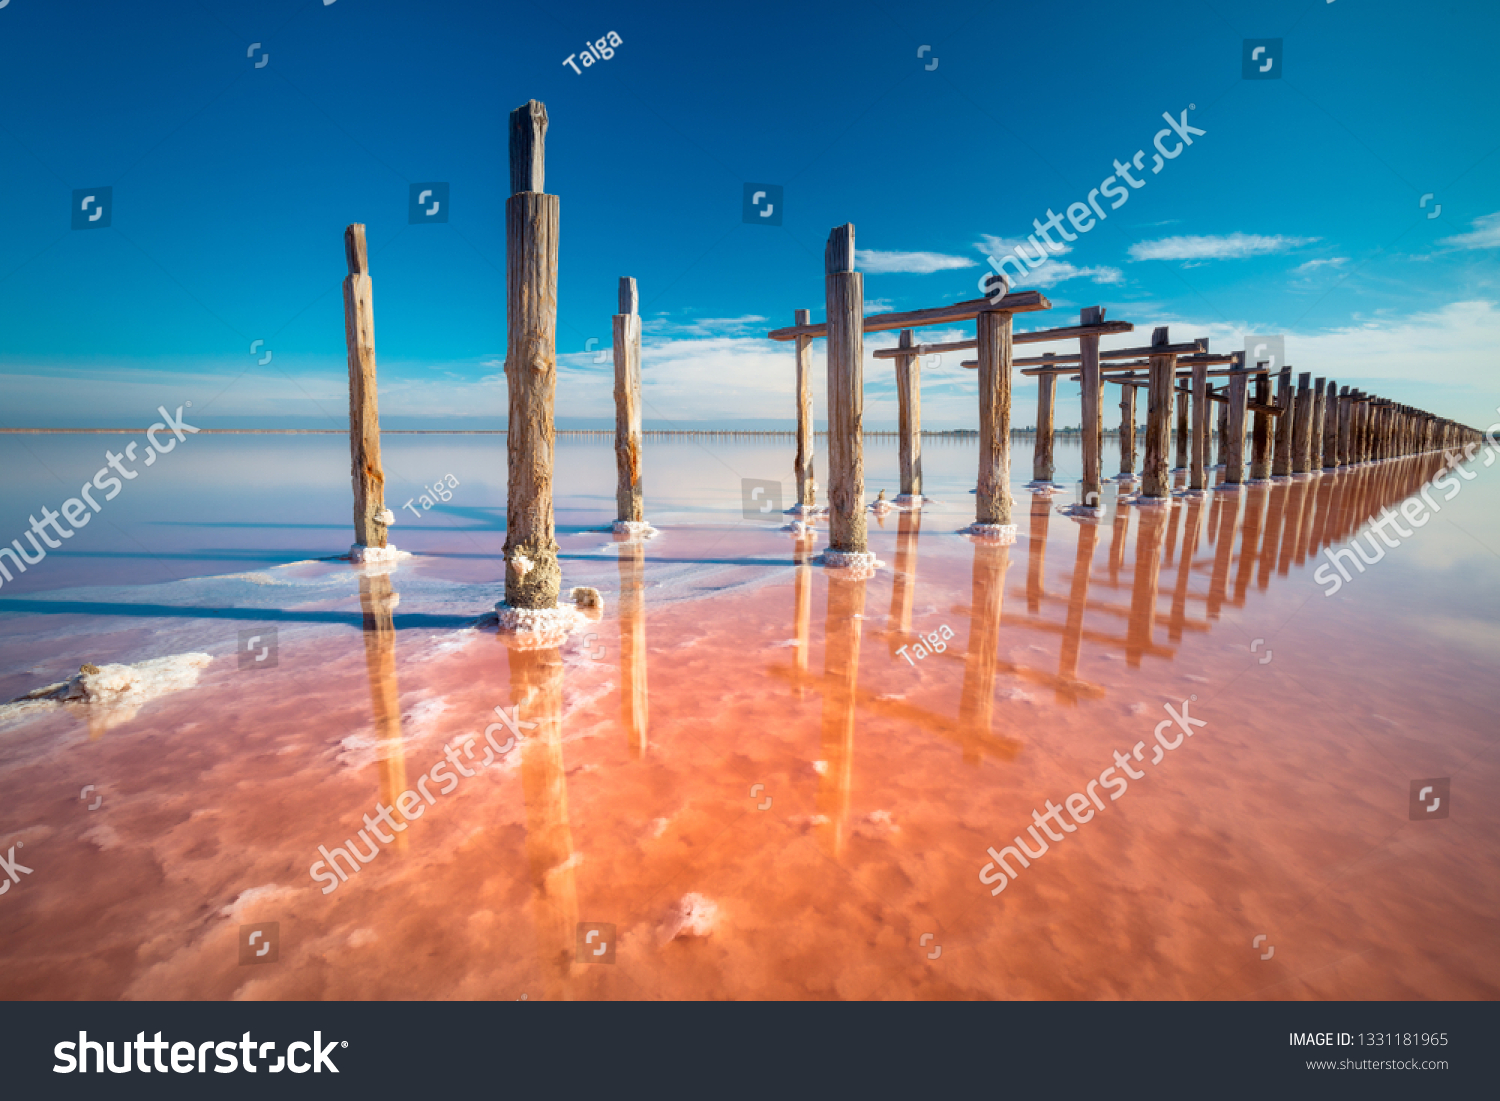 Amazing Real pink color salt lake and deep blue sky minimalistic natural landscape #1331181965